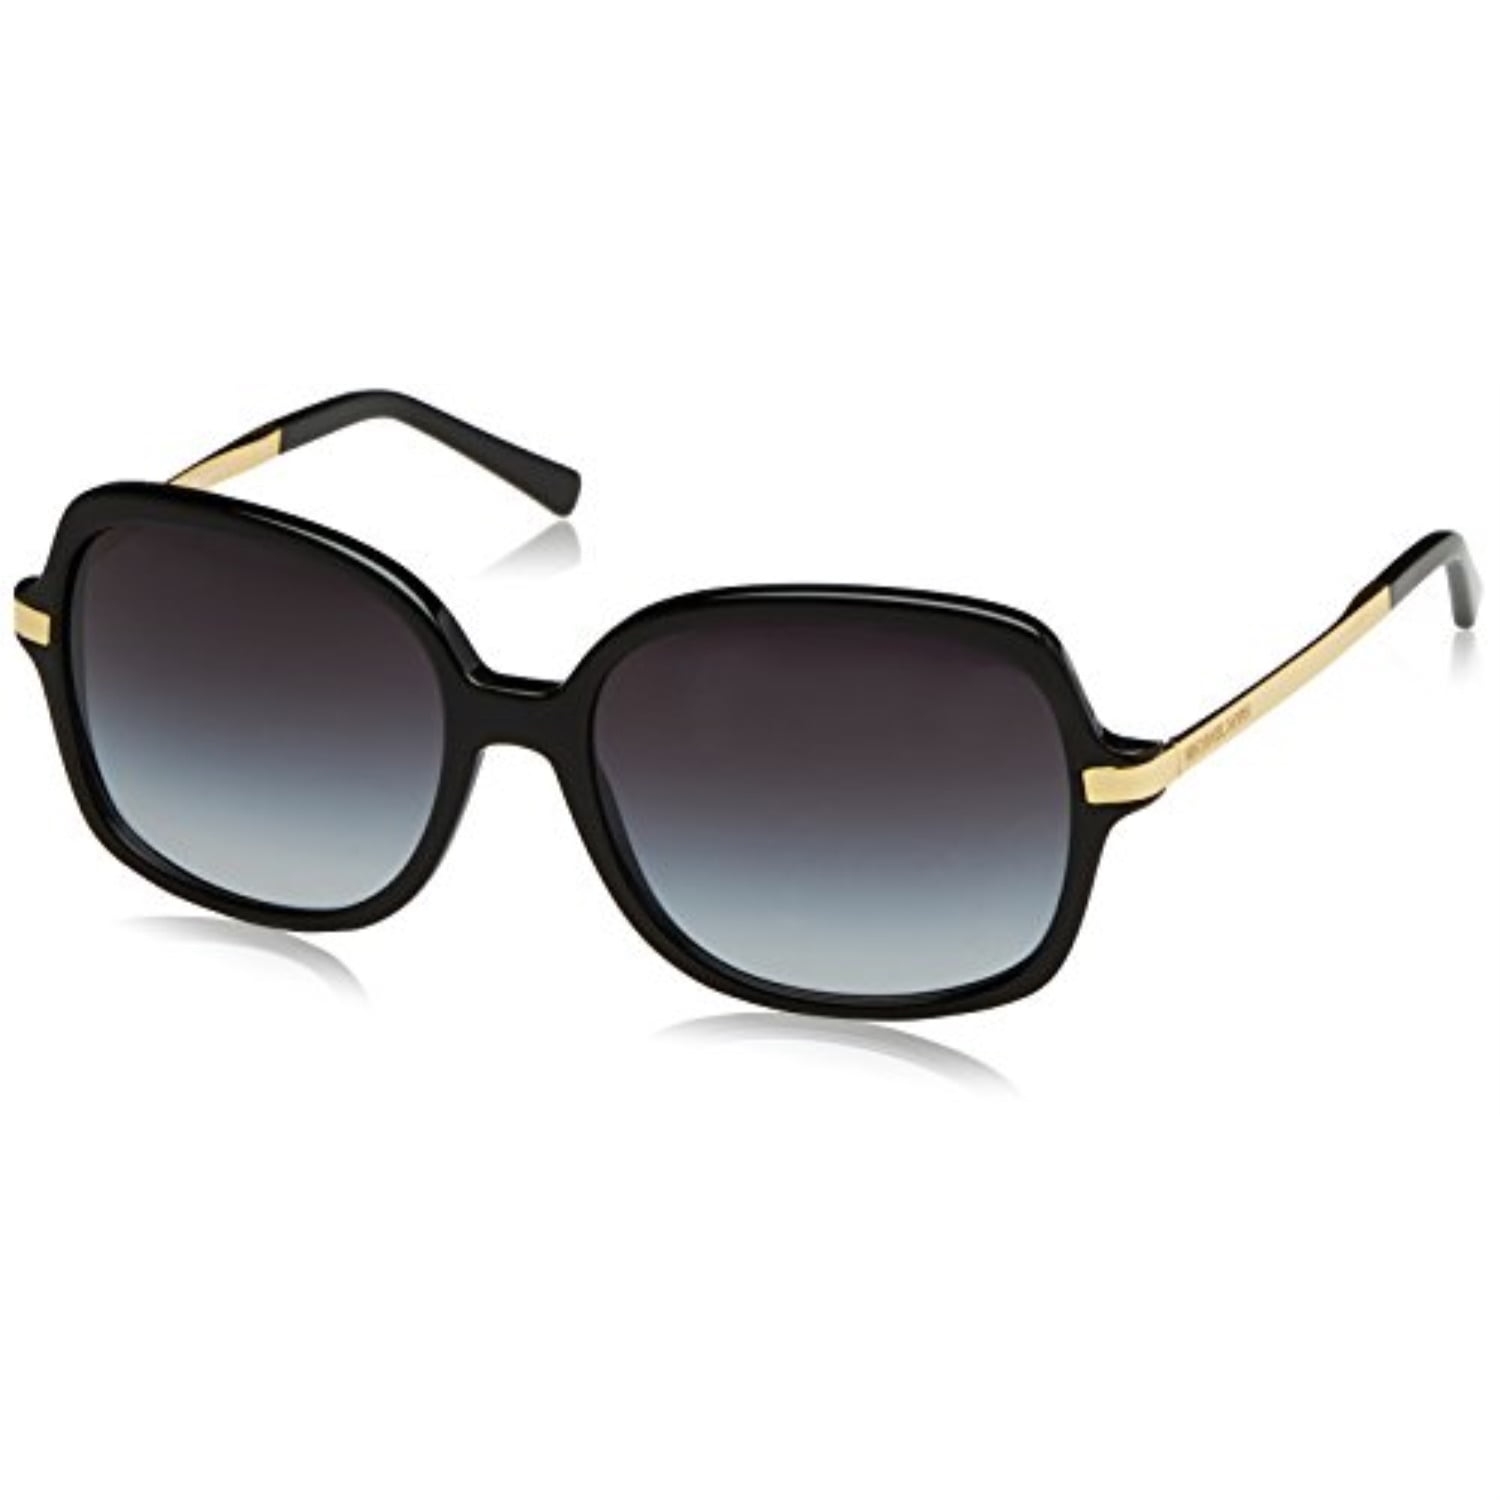 Chi Tiết 56 Về Michael Kors Black And Gold Sunglasses Vn